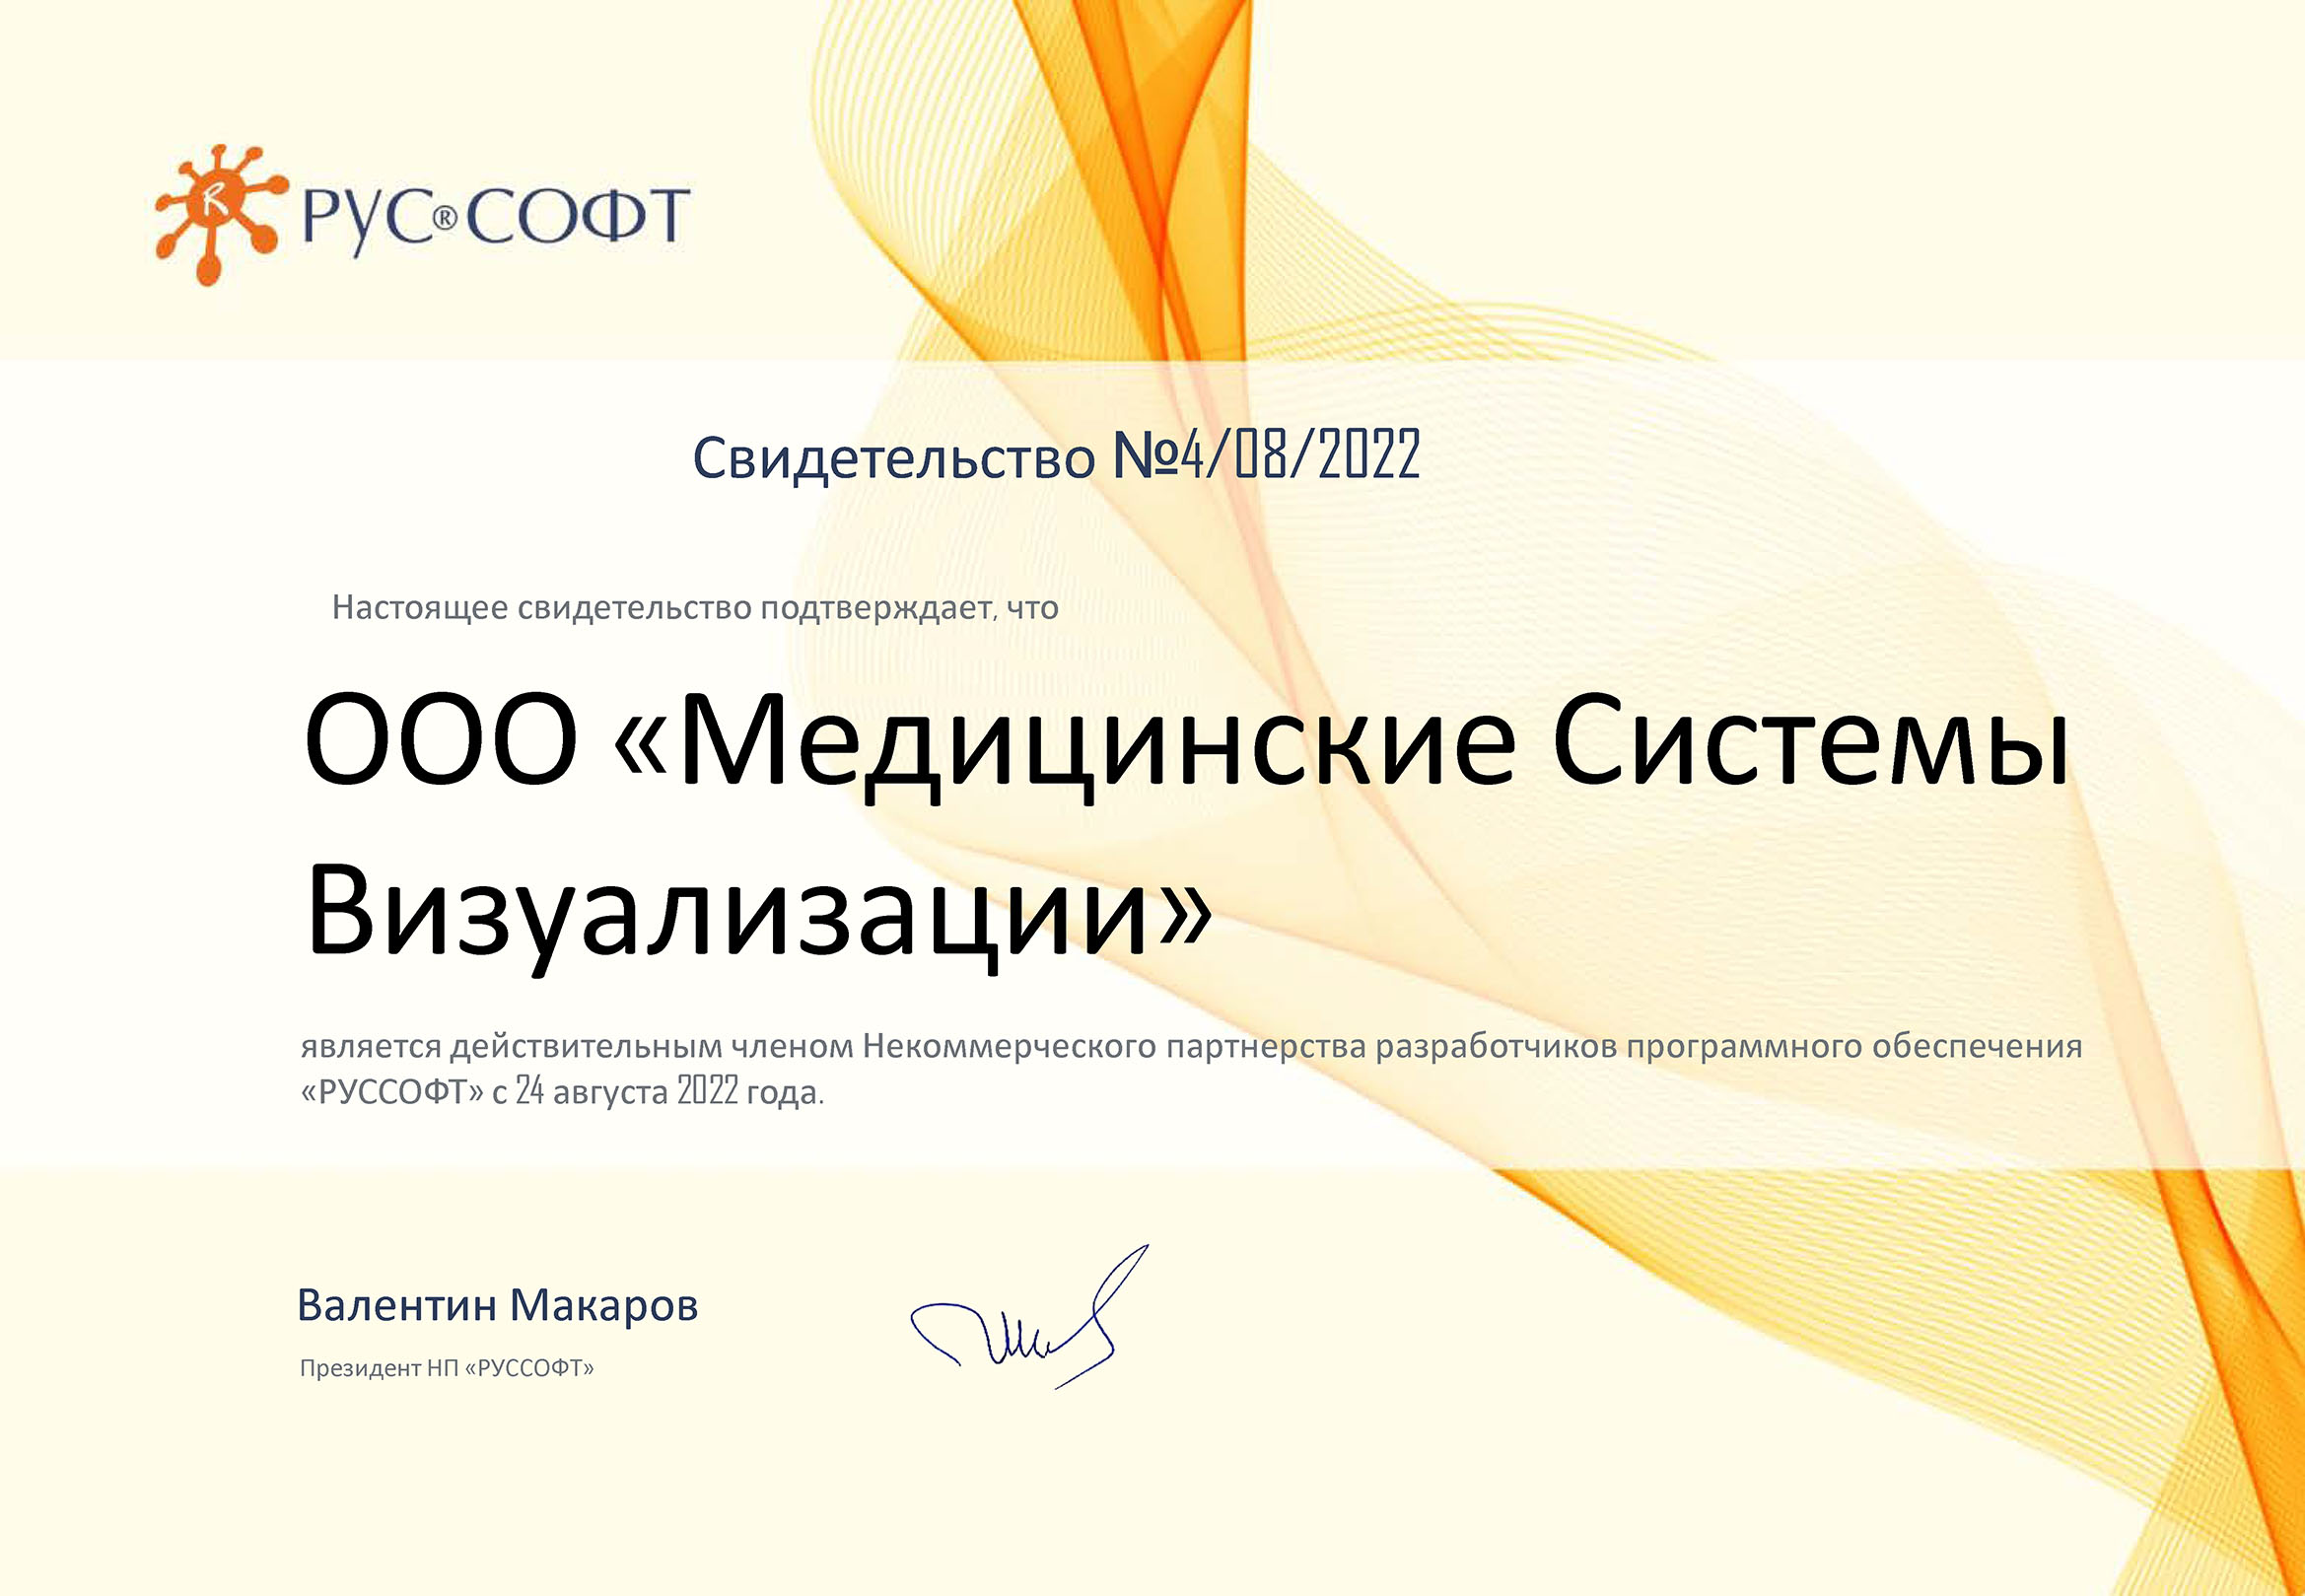 MVS membership in RUSSOFT